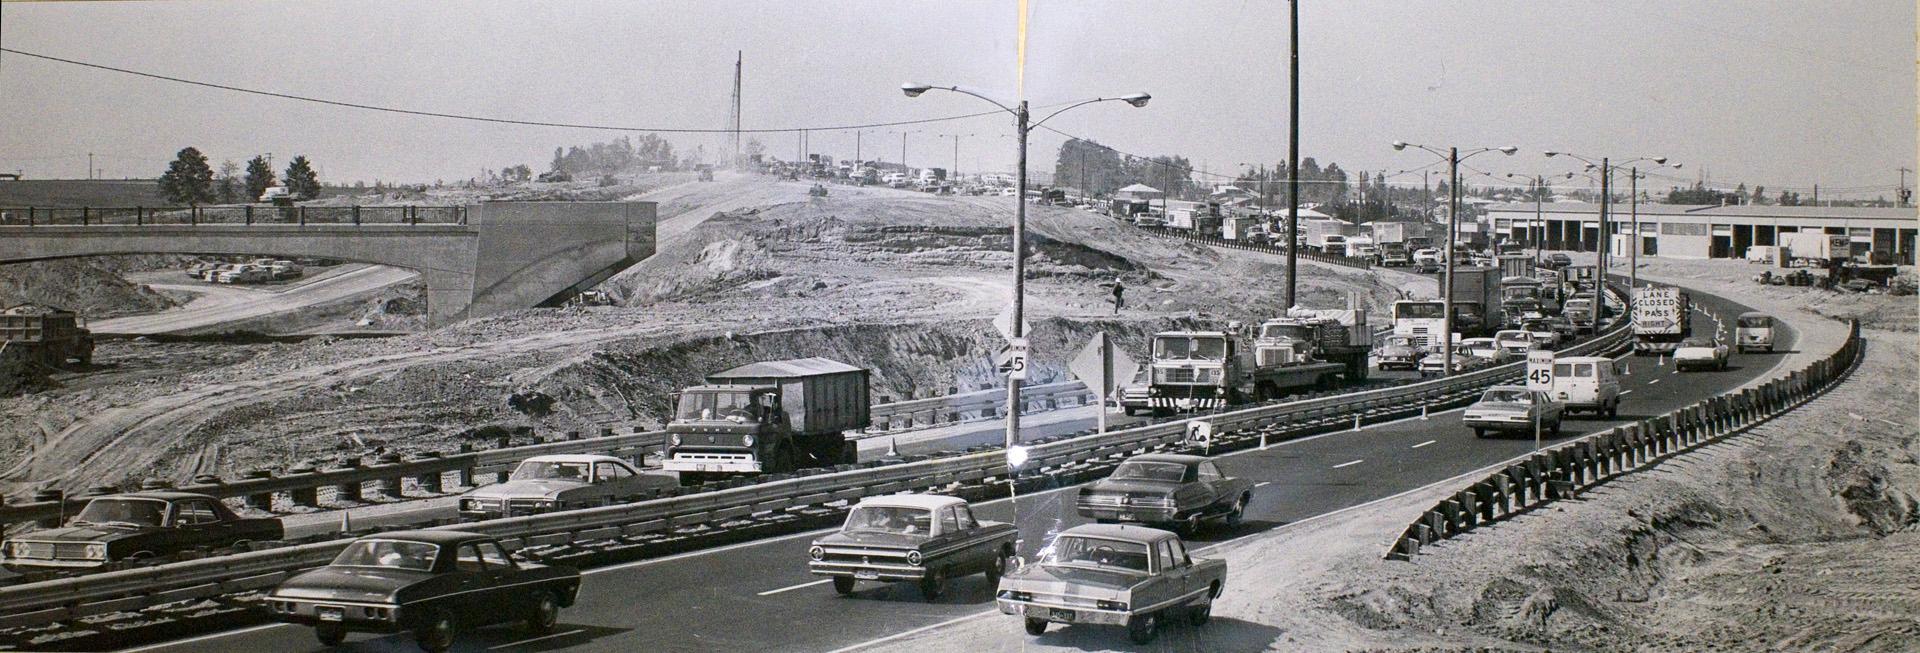 Highways - Canada - Ontario - 401 1950 - 1959